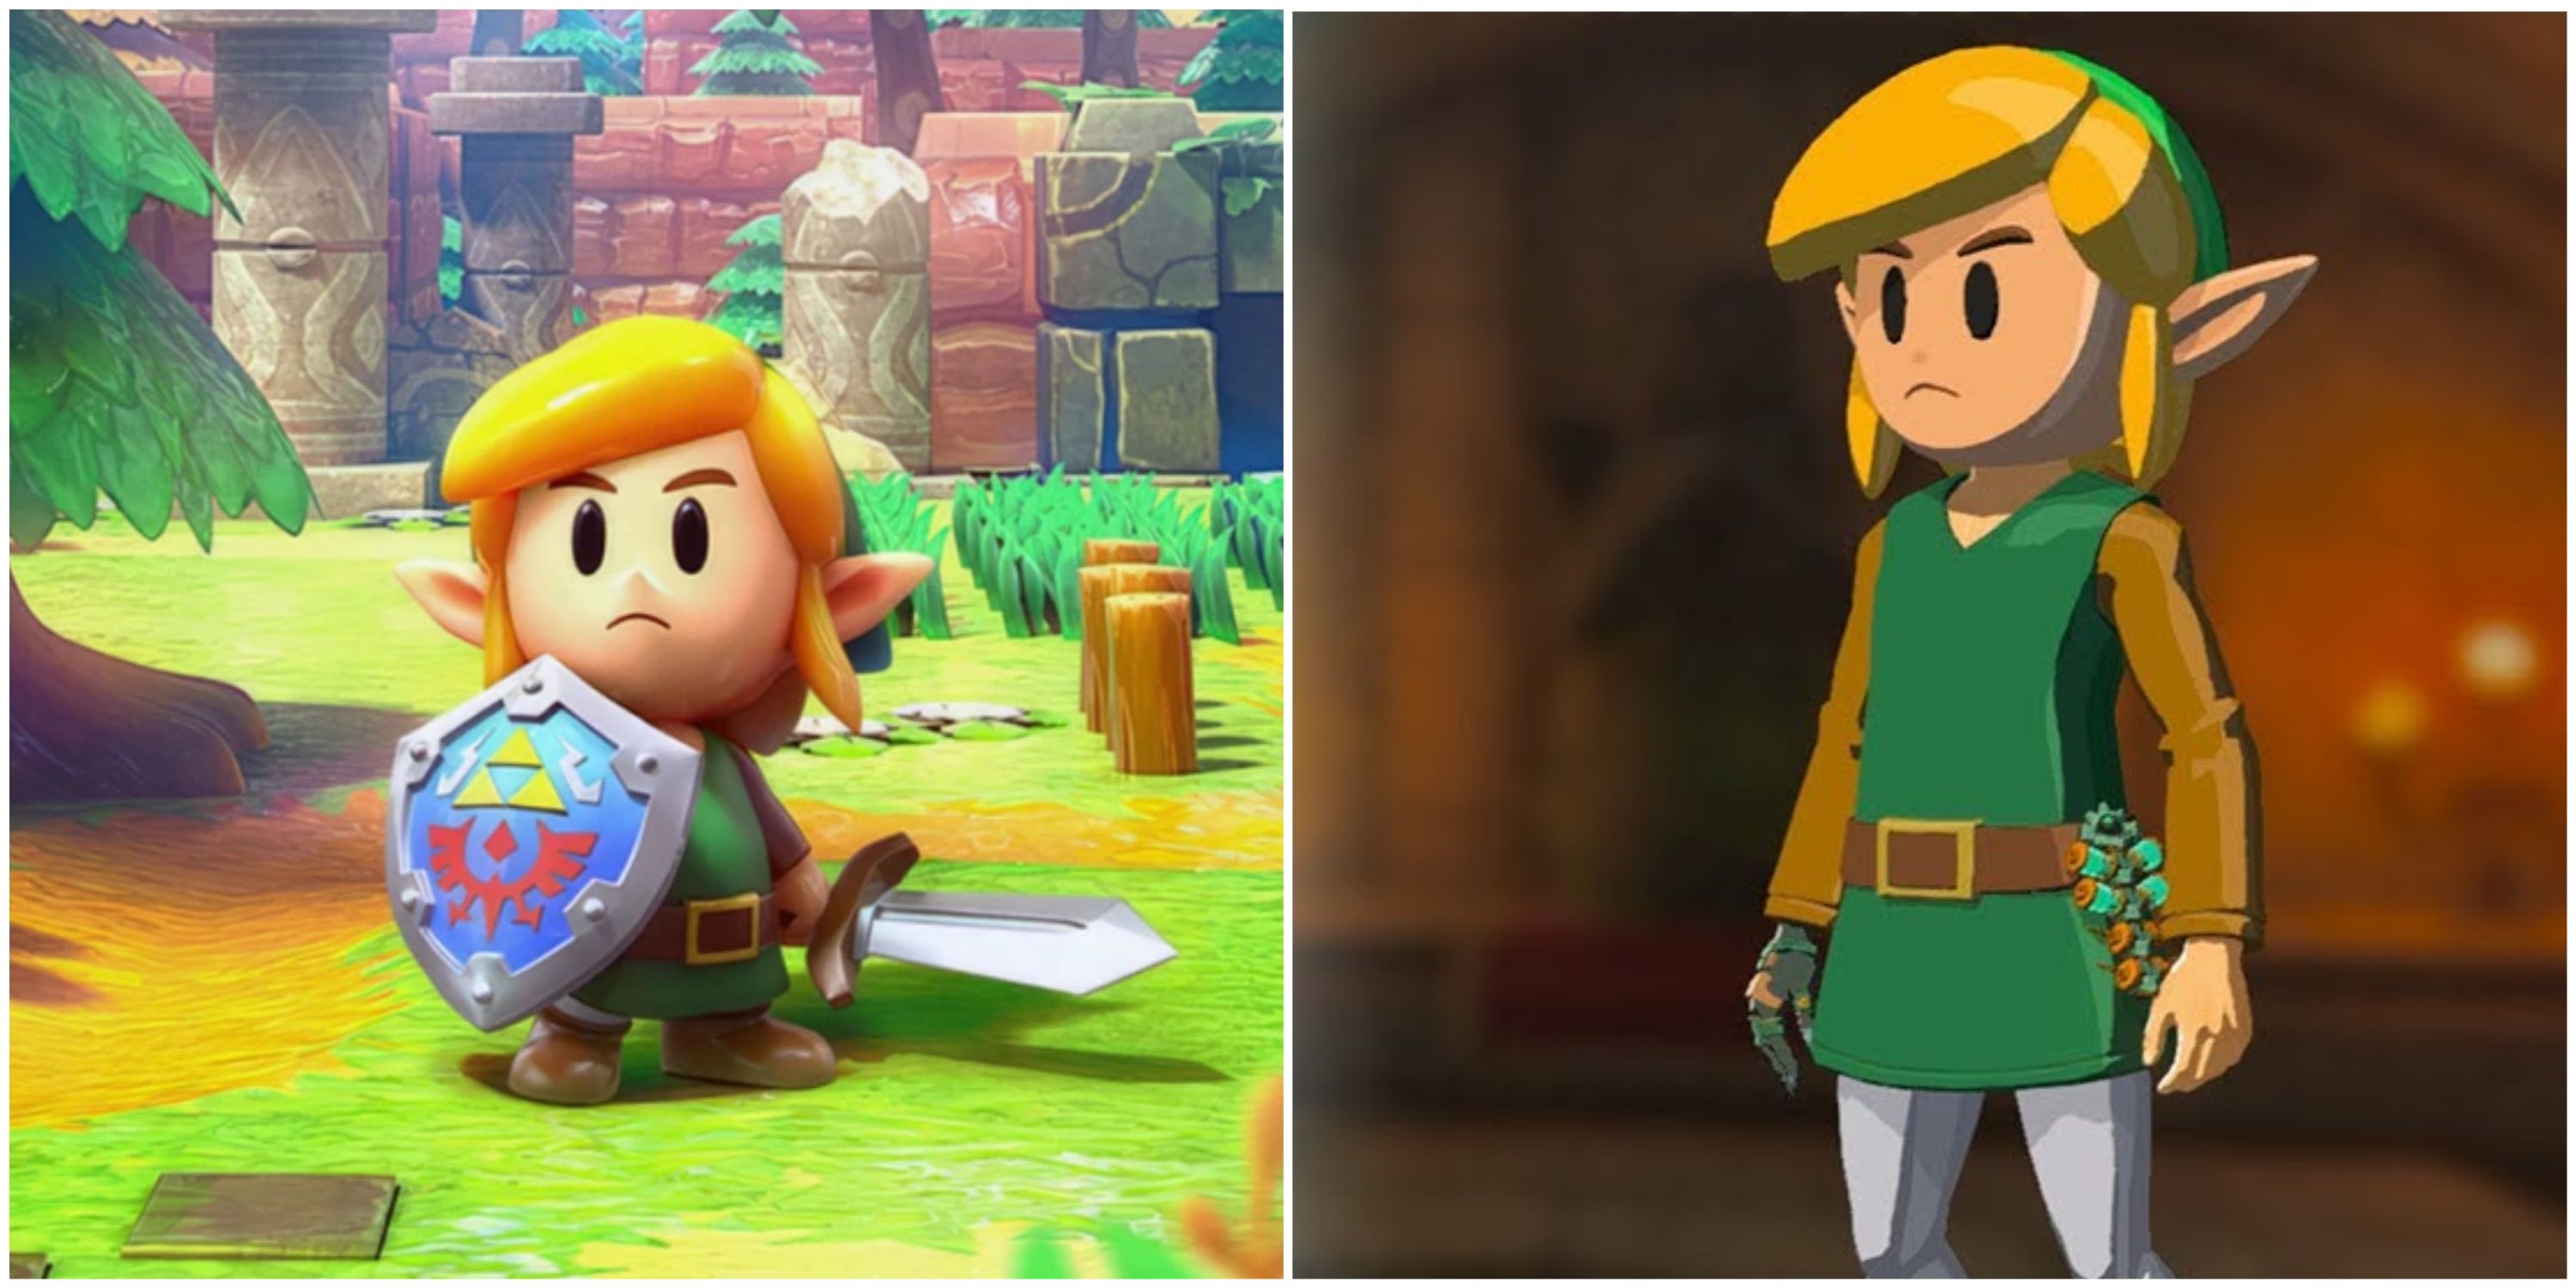 Link in The Legend of Zelda: Link's Awakening and Tears of the Kingdom